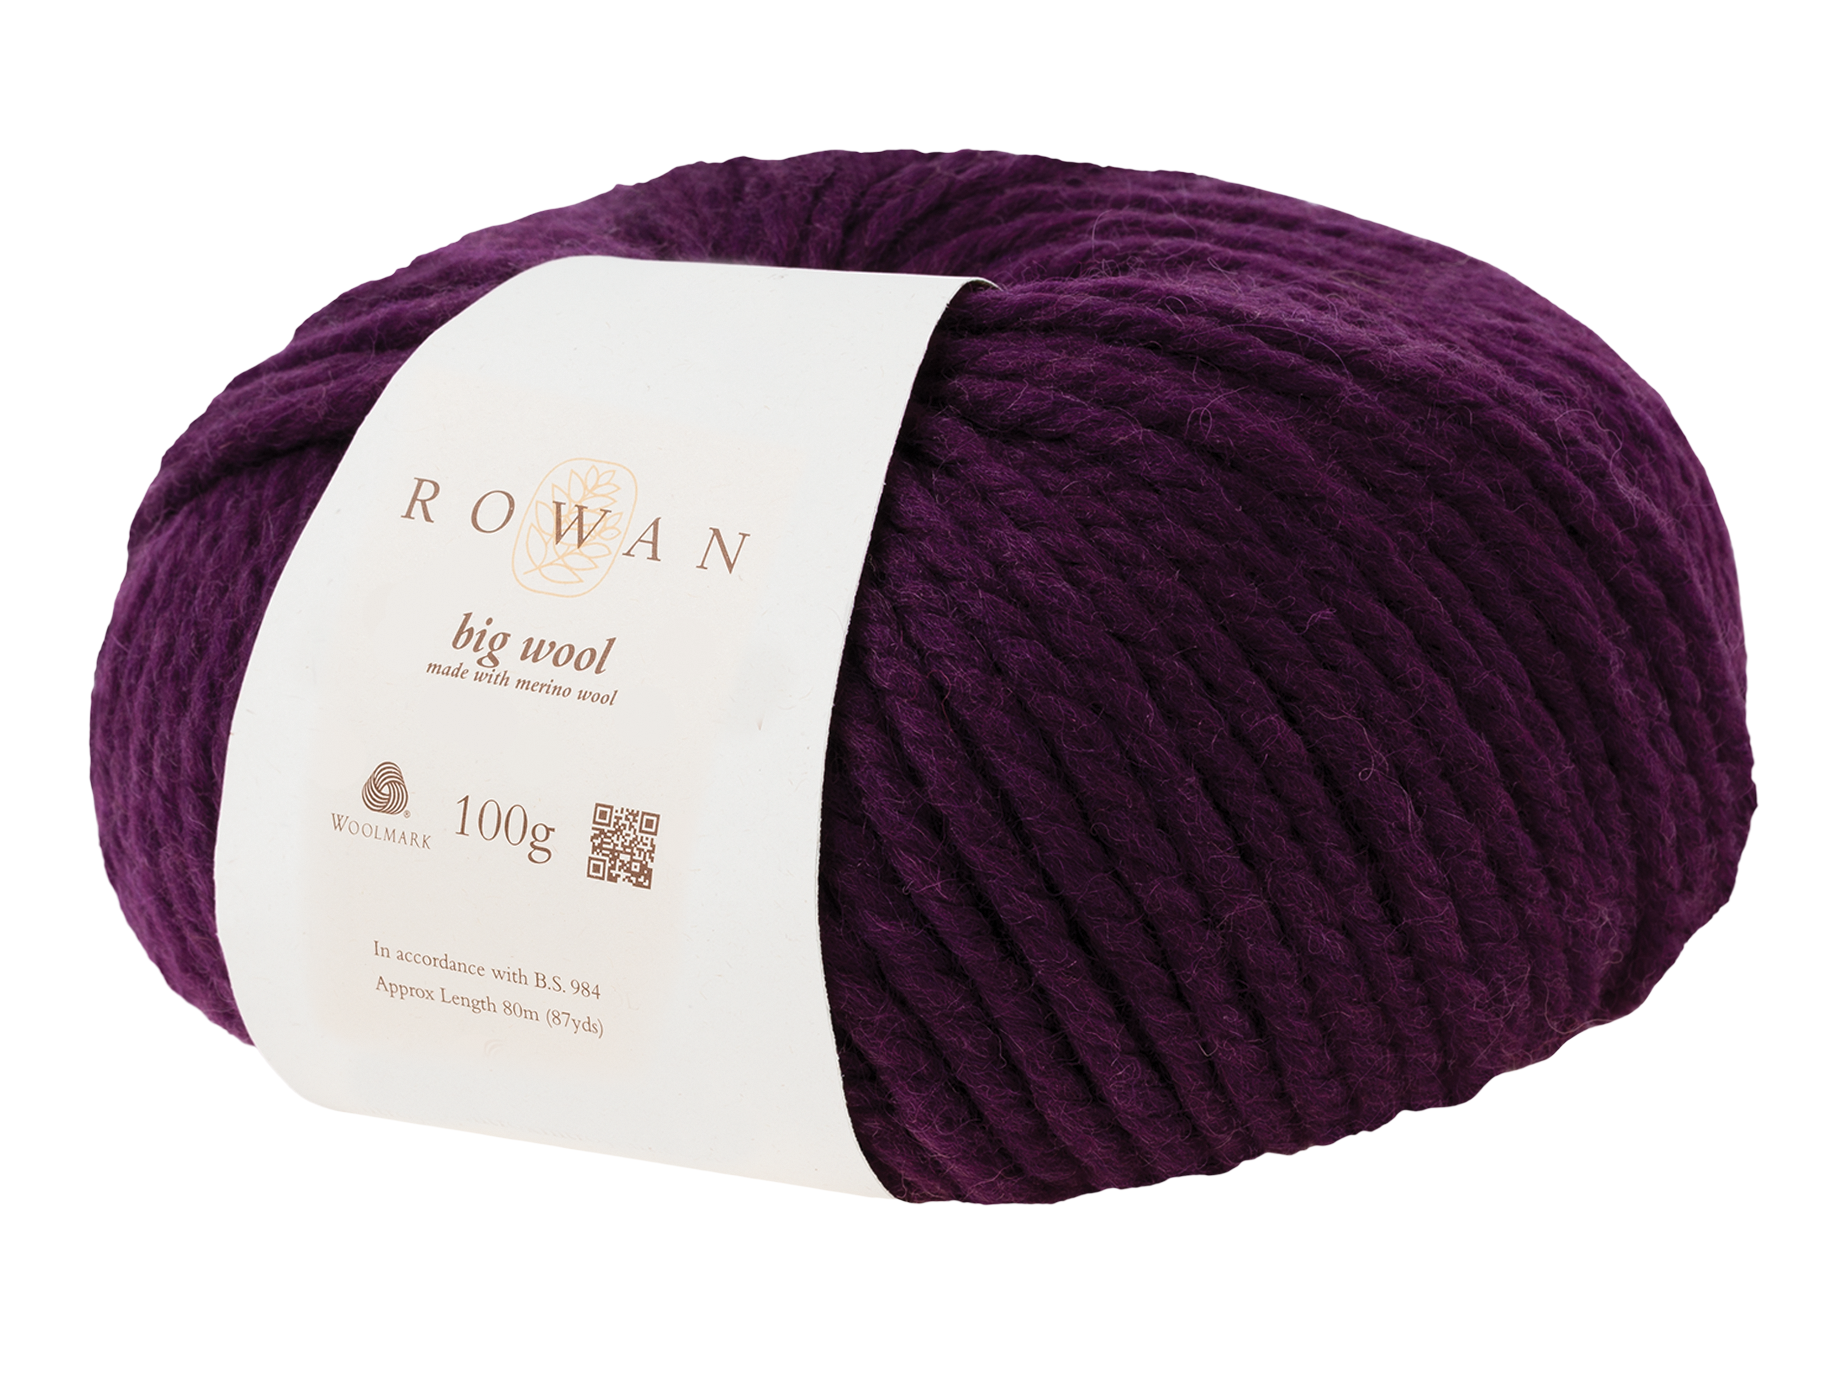 Rowan Big wool - 25 Wild Berry